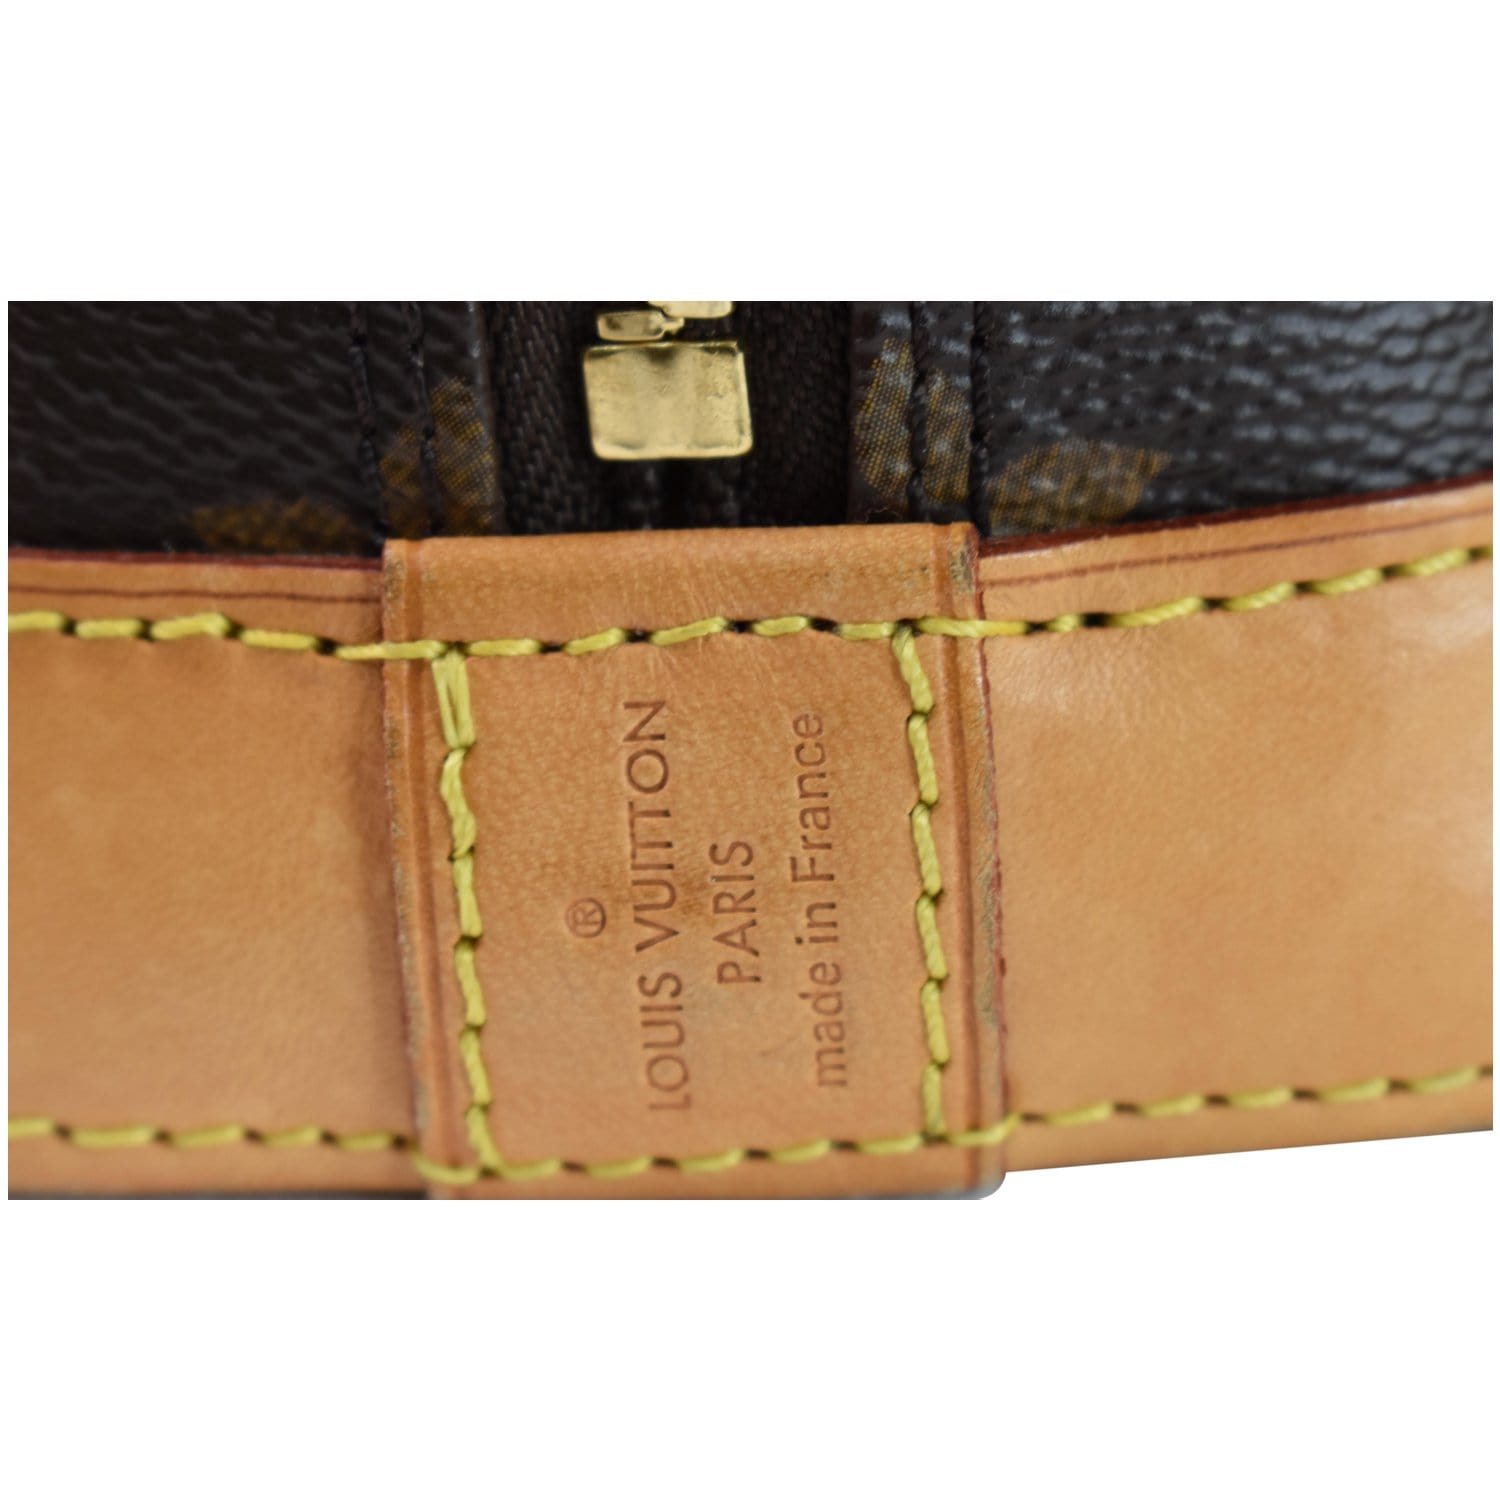 Louis Vuitton pre-owned Alma BB Shoulder Bag - Farfetch